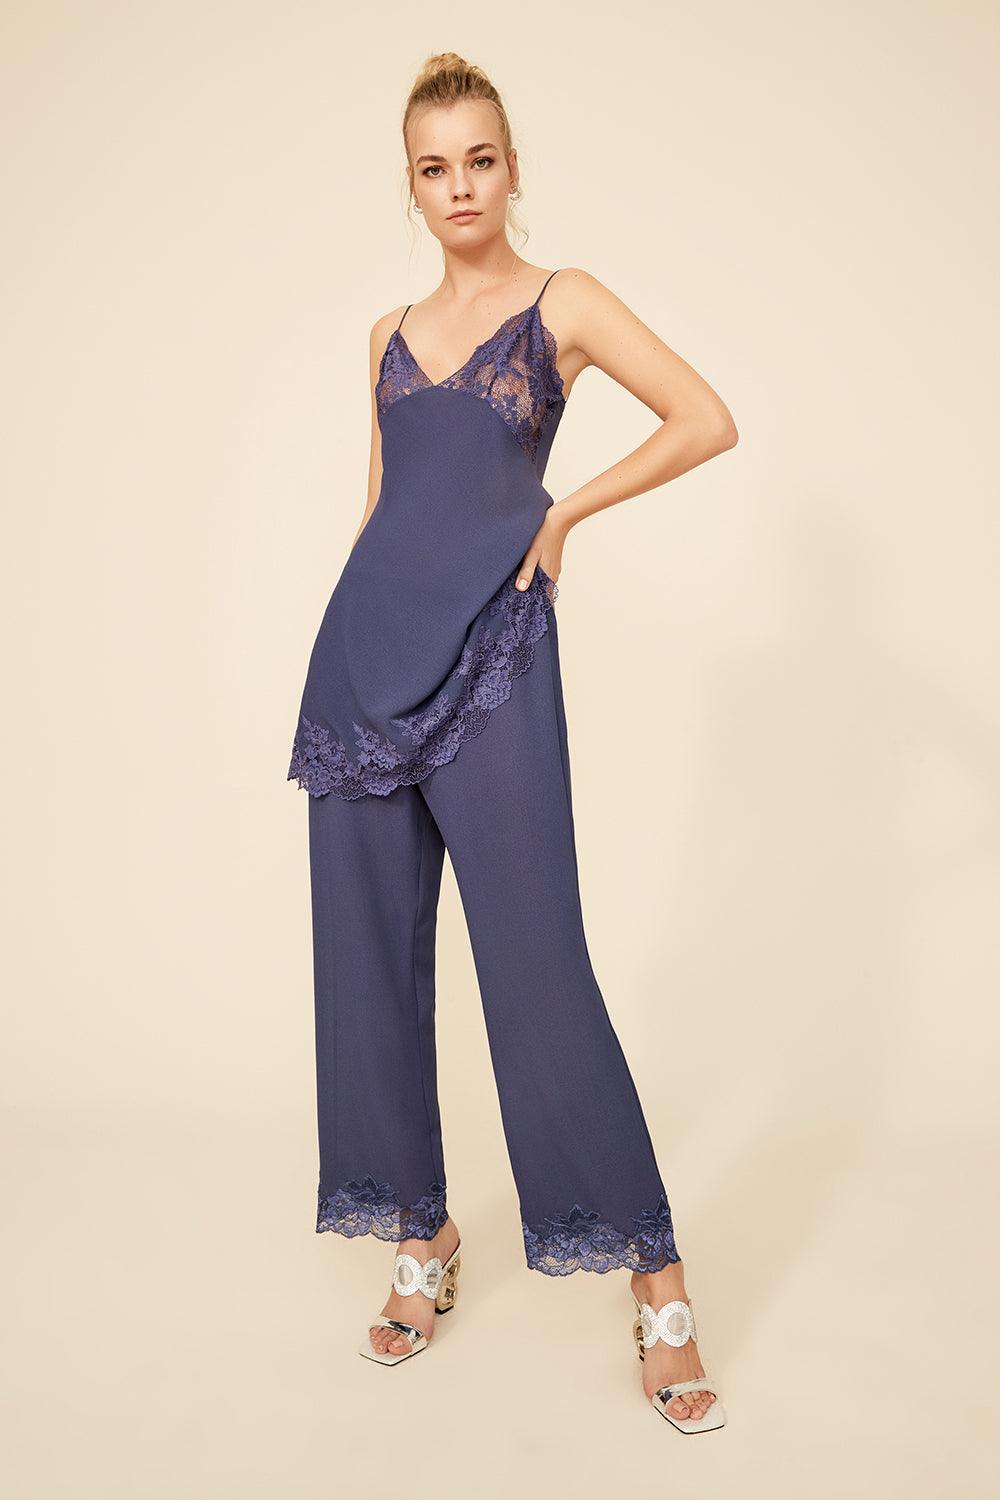 Women's Luxury Pyjamas & Nightwear Sets - Bocan Couture